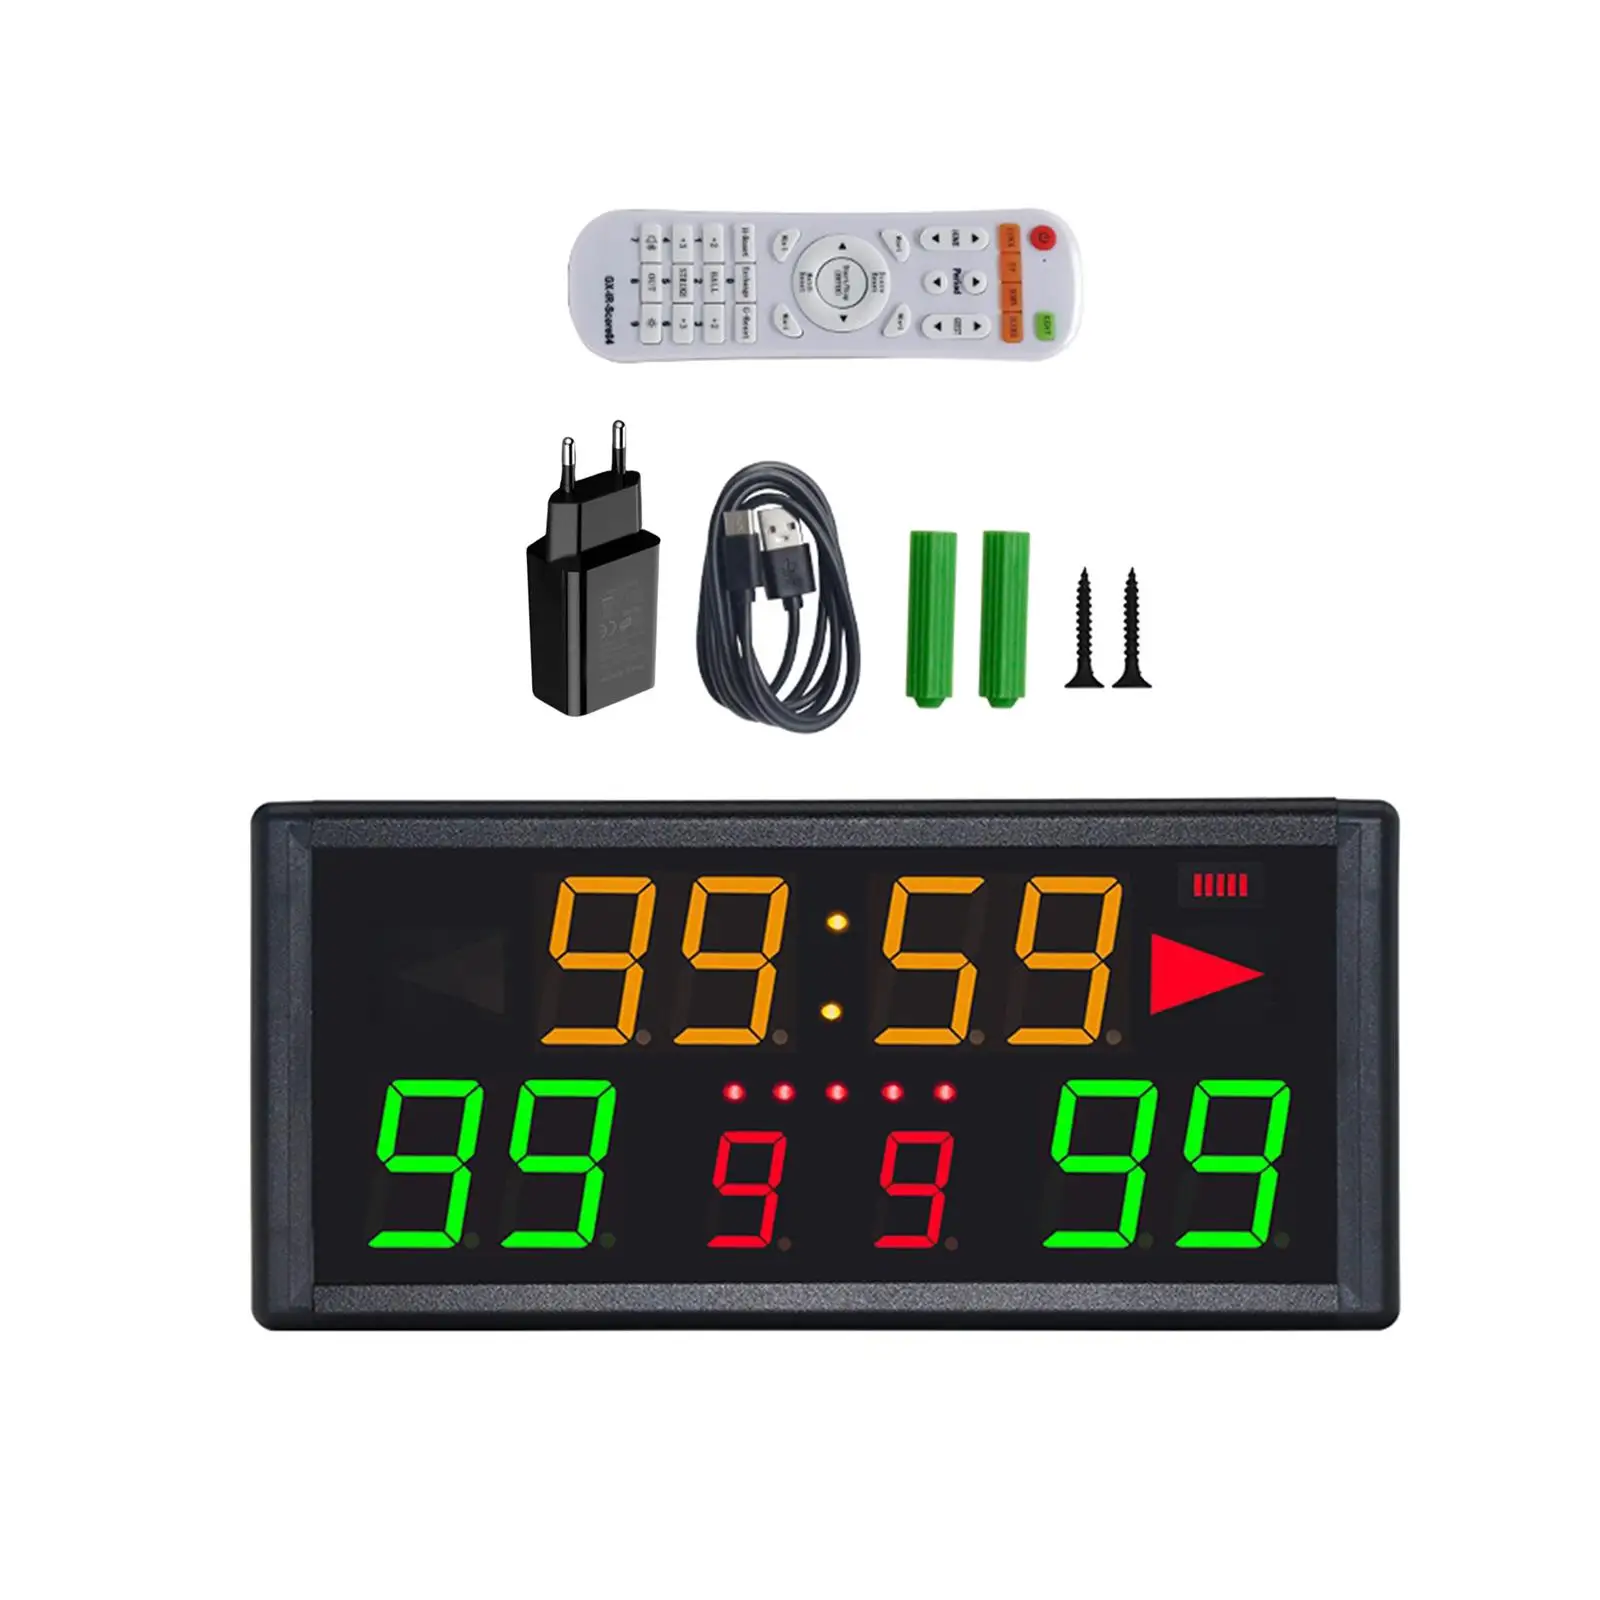 

Digital Scoreboard 30M Visual Distance Remote Control Durable Portable Score Clock for Basketball Badminton Volleyball Football